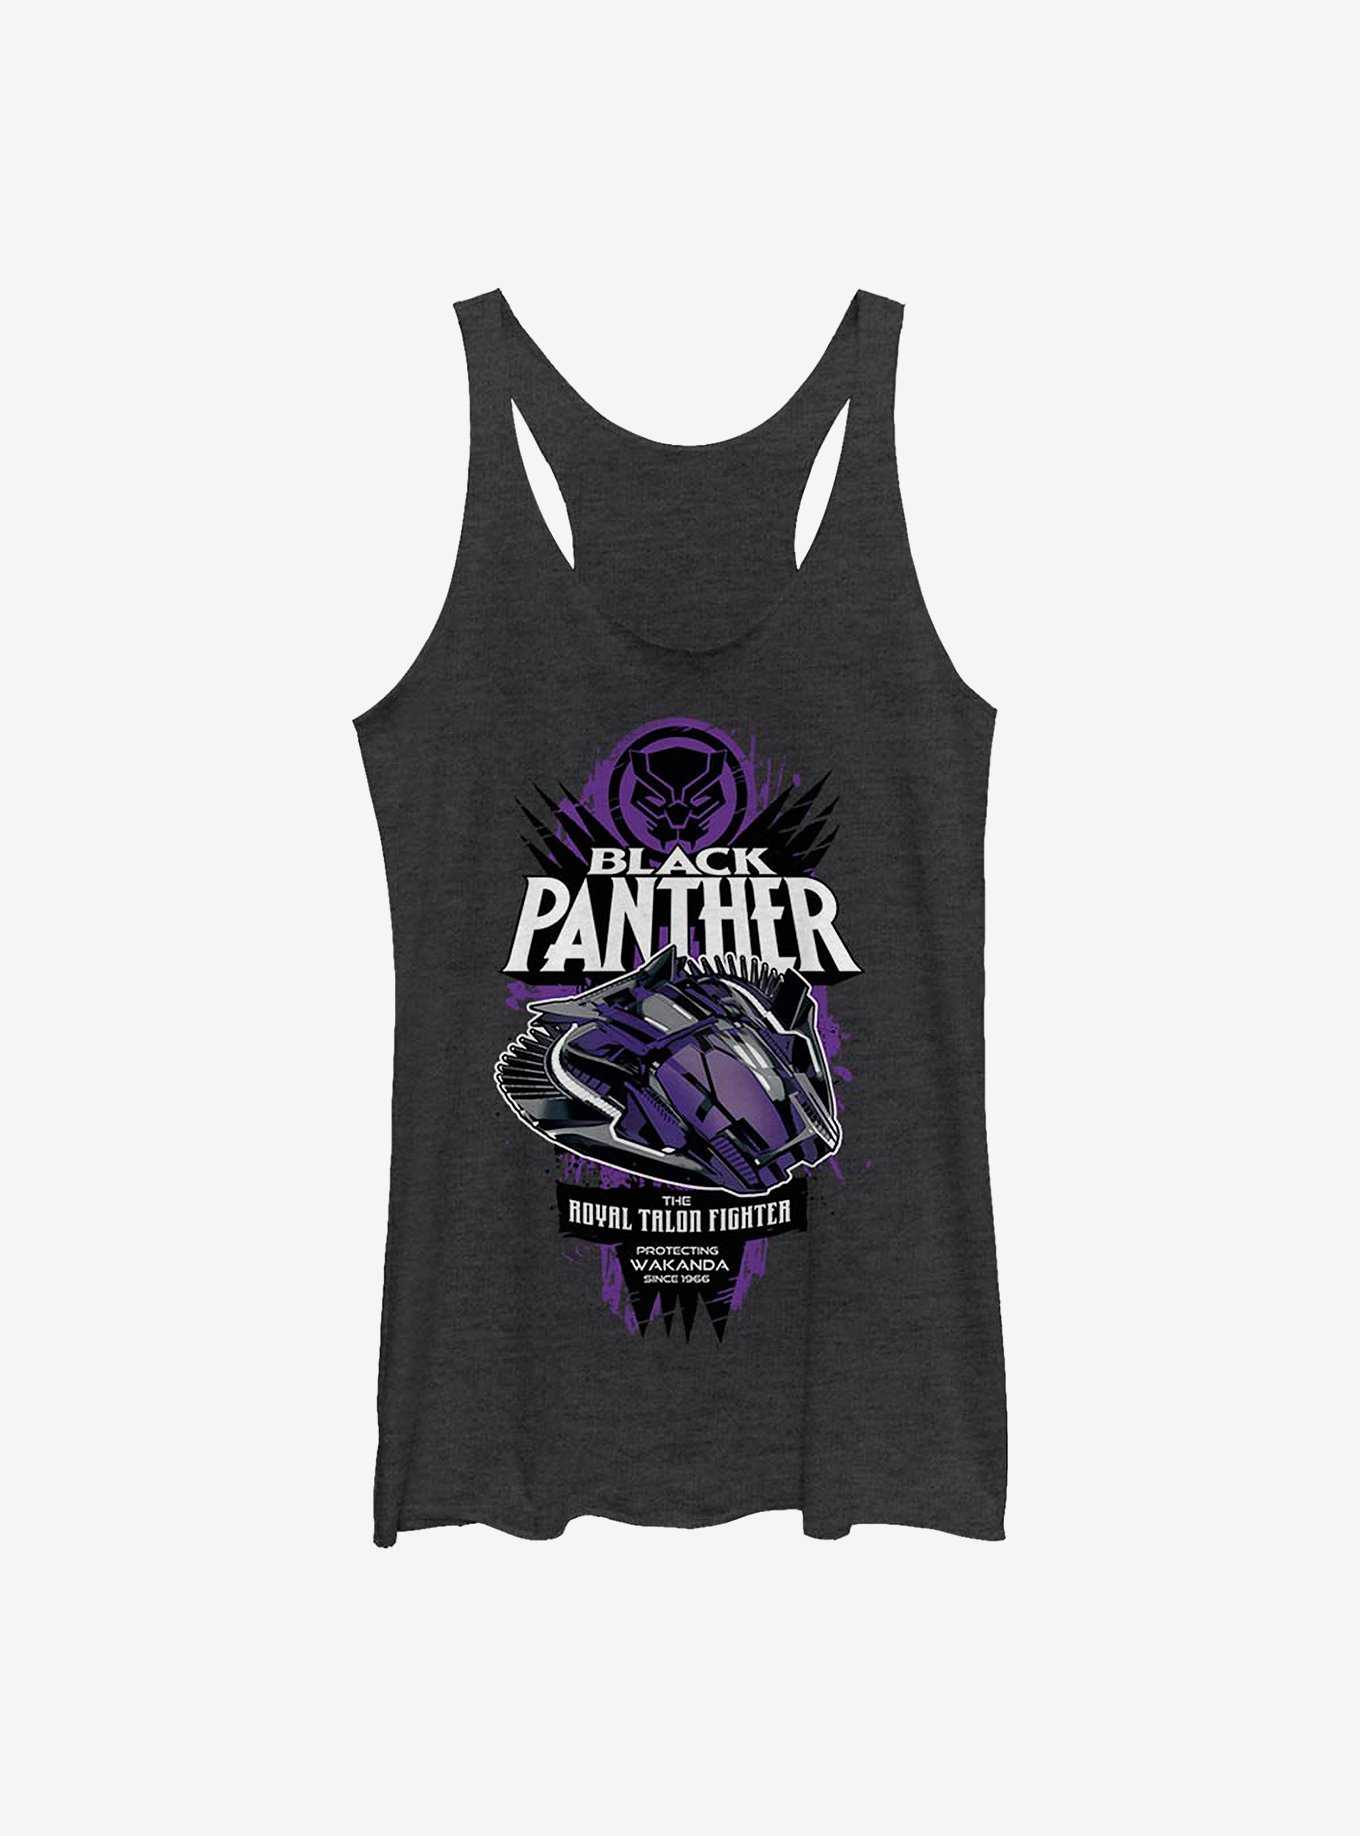 Marvel Black Panther The Royal Talon Fighter Girls Tank, , hi-res